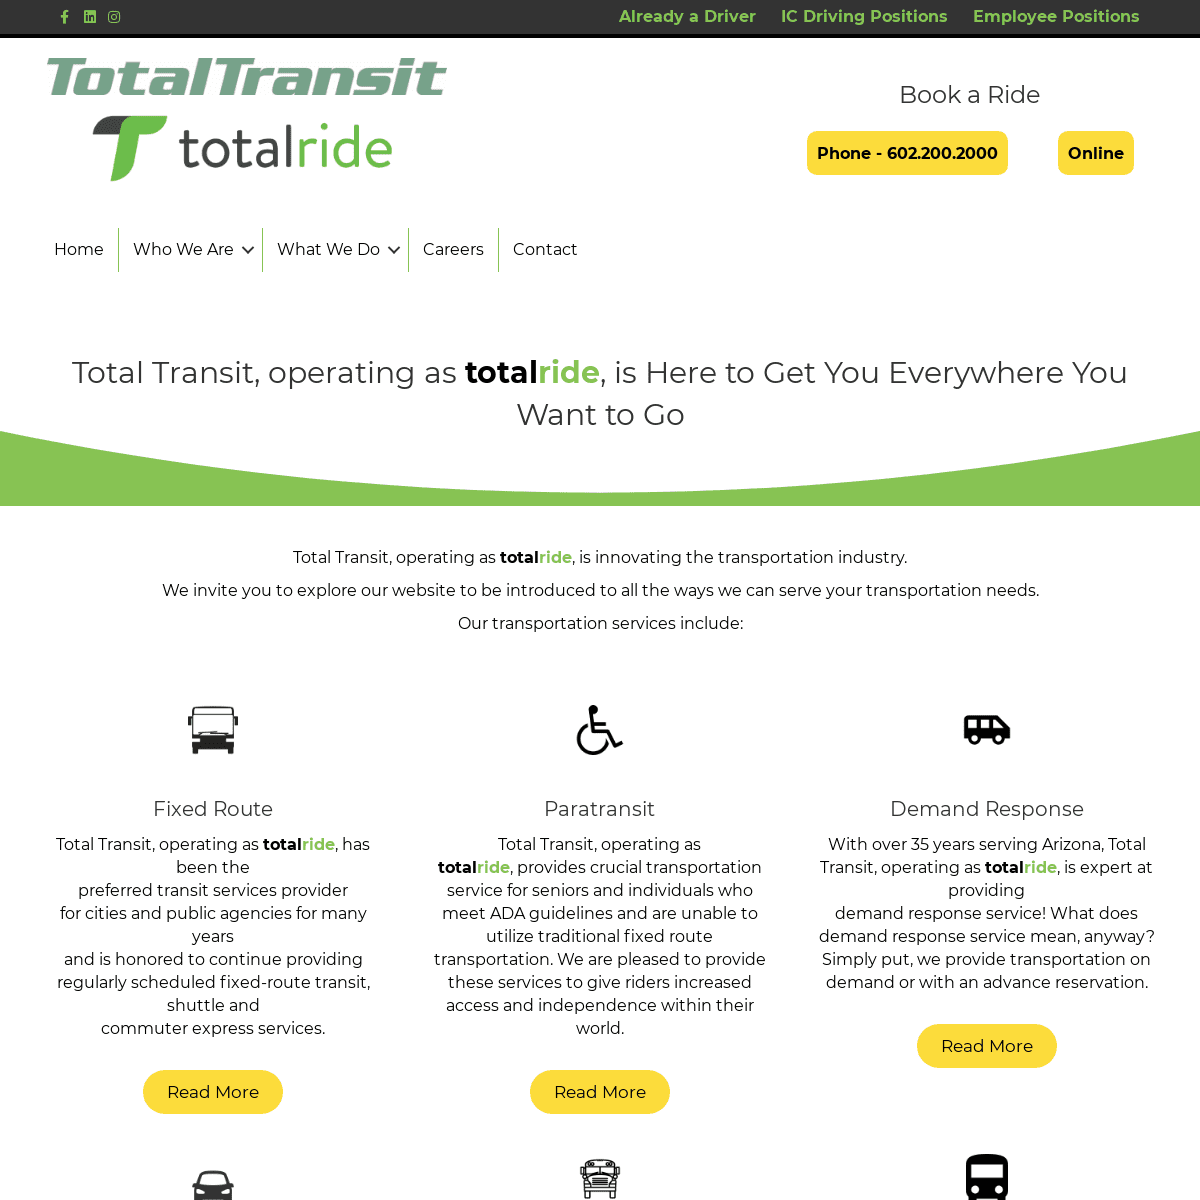 A complete backup of totalride.com